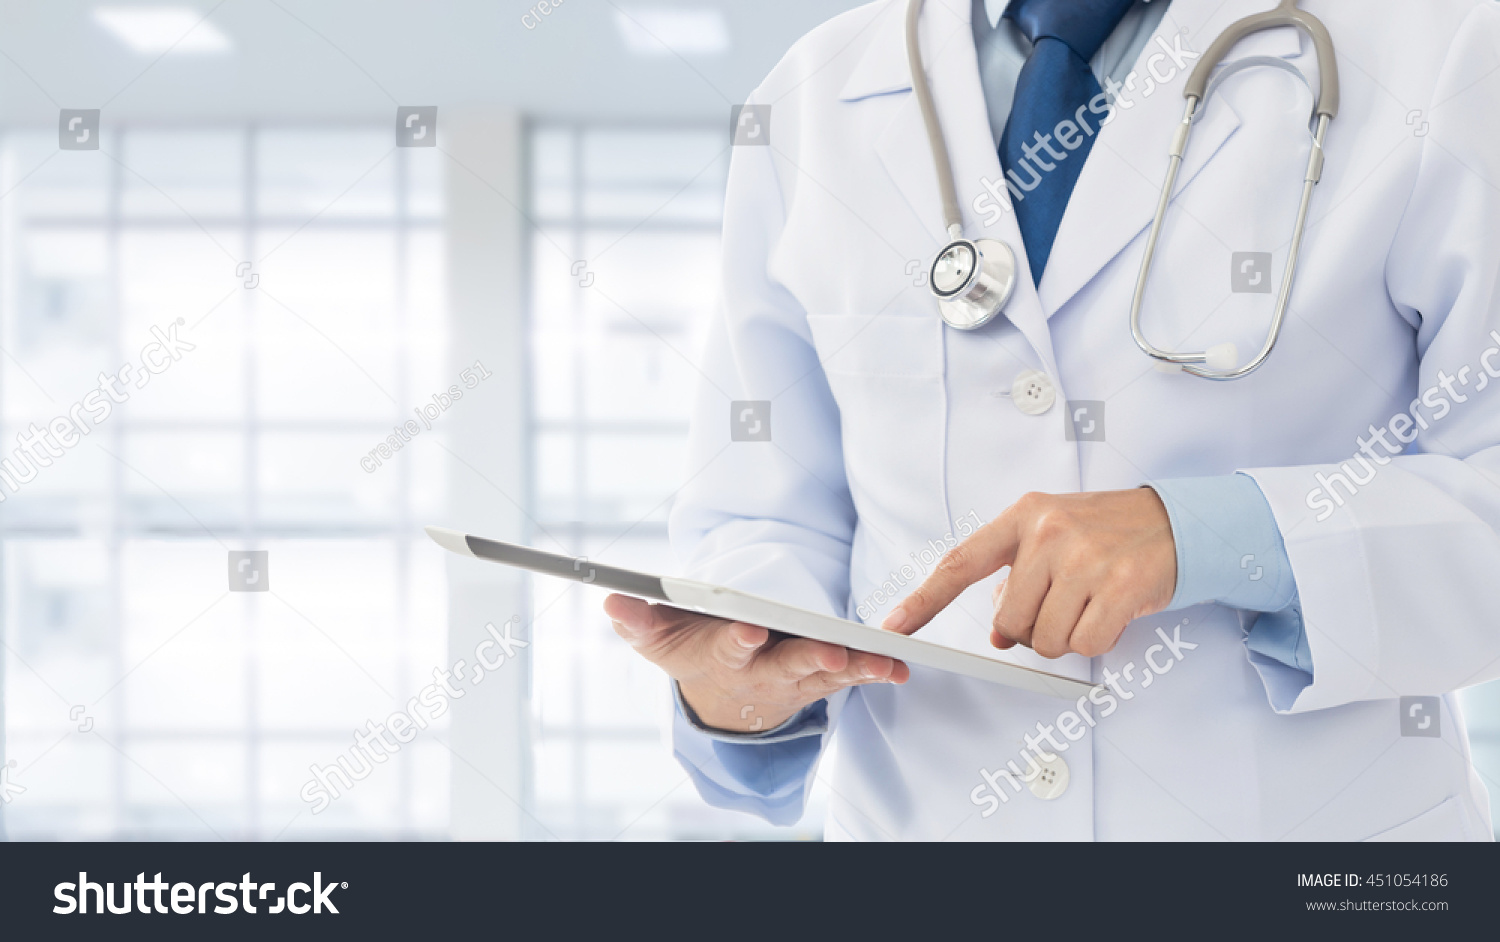 Doctor using digital tablet find information patient medical history at the hospital. Medical technology concept.

 #451054186